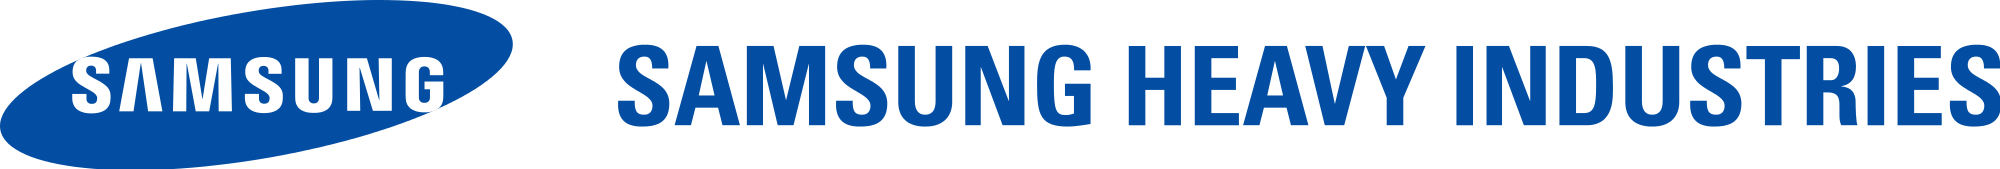 Samsung Heavy Industries Brand Logo